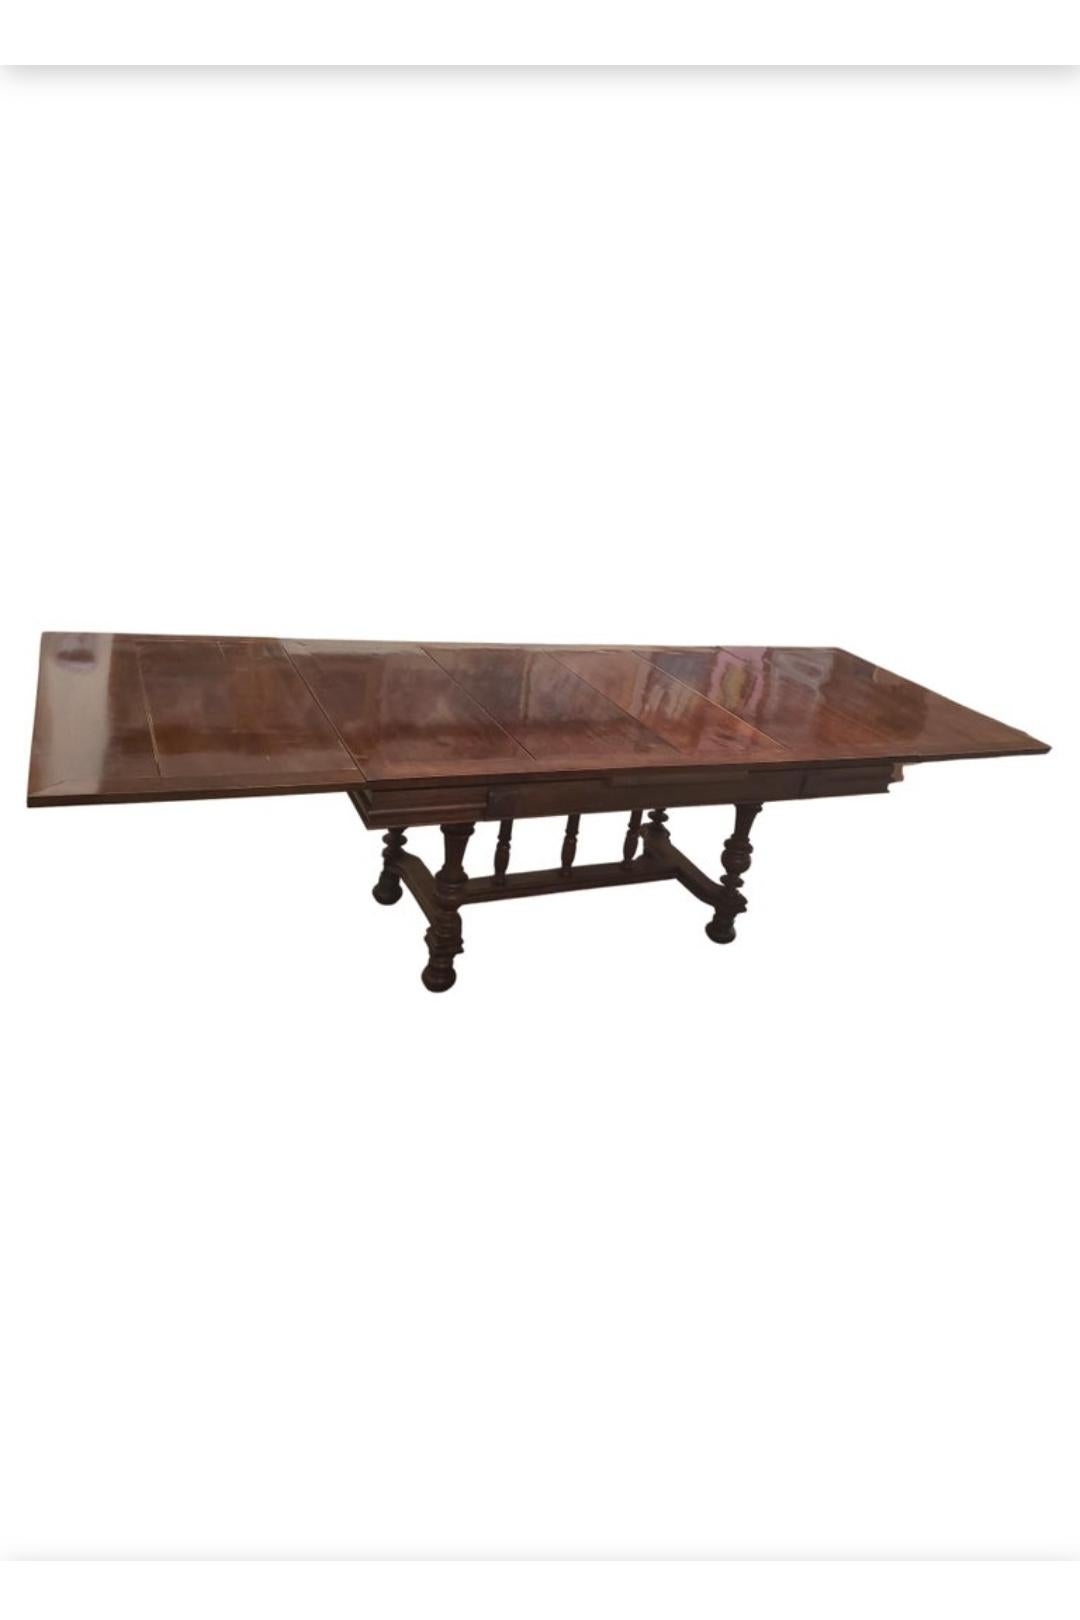 19th Century Refinished Walnut Stretcher Draw Leaf Dining Table 5